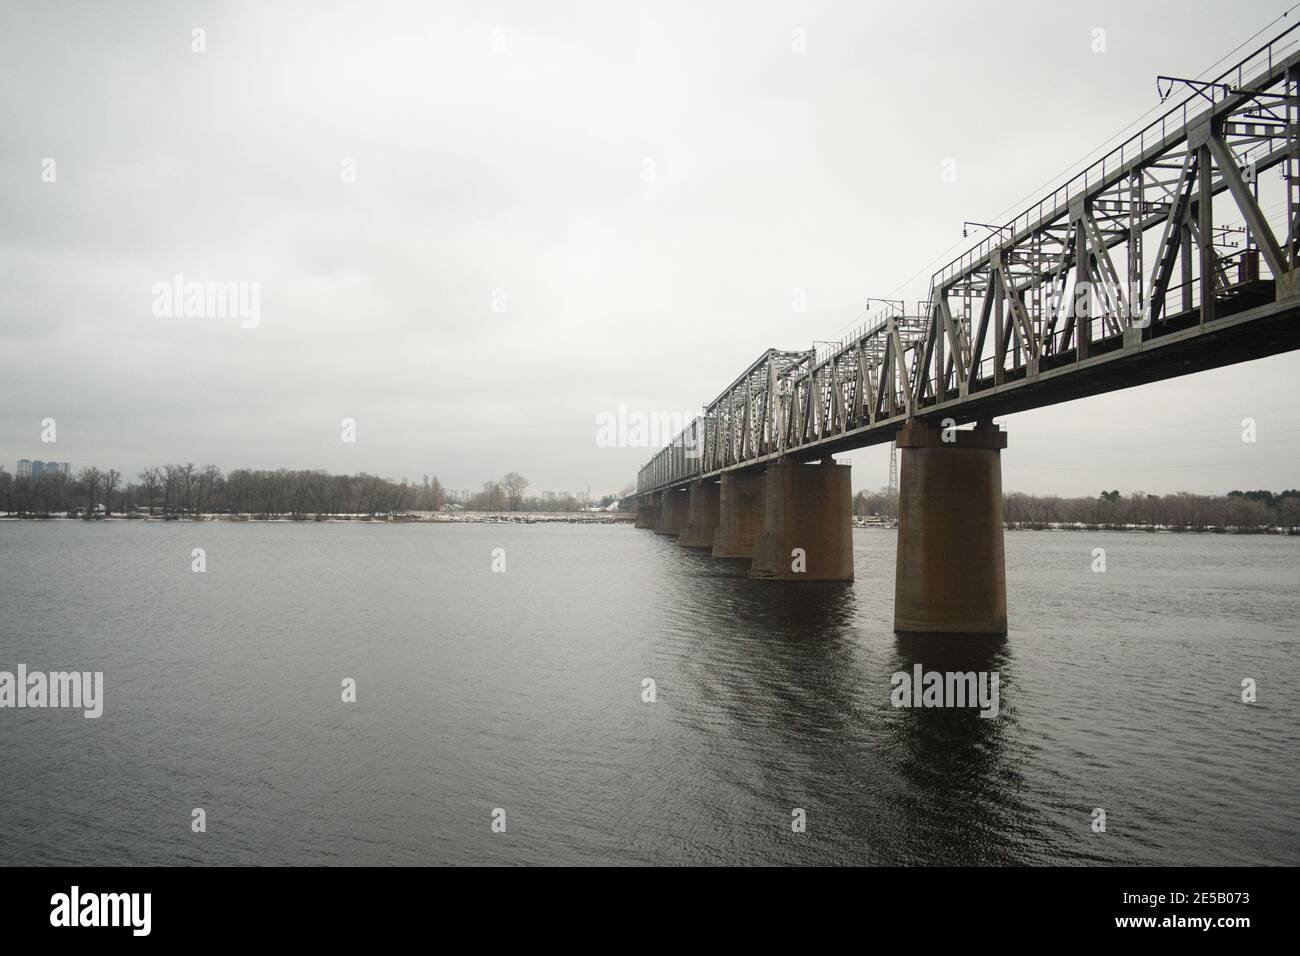 Railway bridge over Dnipro river in Kyiv. Industrial steel bridge across the river. Stock Photo